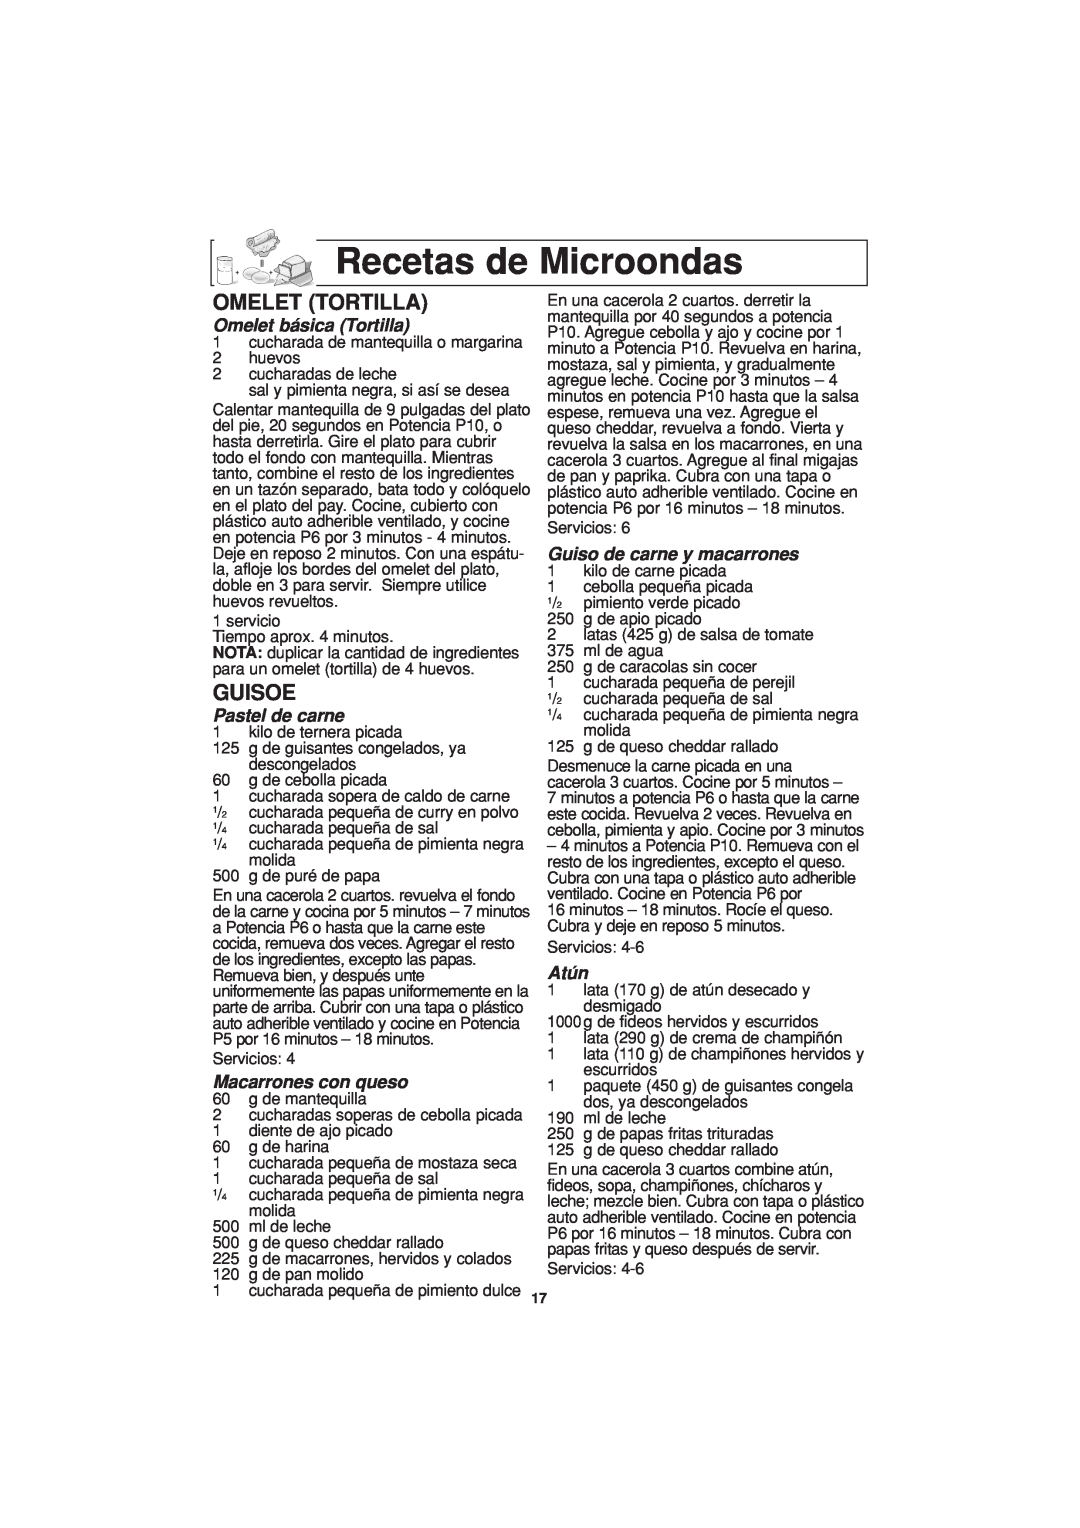 Panasonic NN-H634, NN-H644 Recetas de Microondas, Omelet Tortilla, Guisoe, Omelet básica Tortilla, Pastel de carne, Atún 